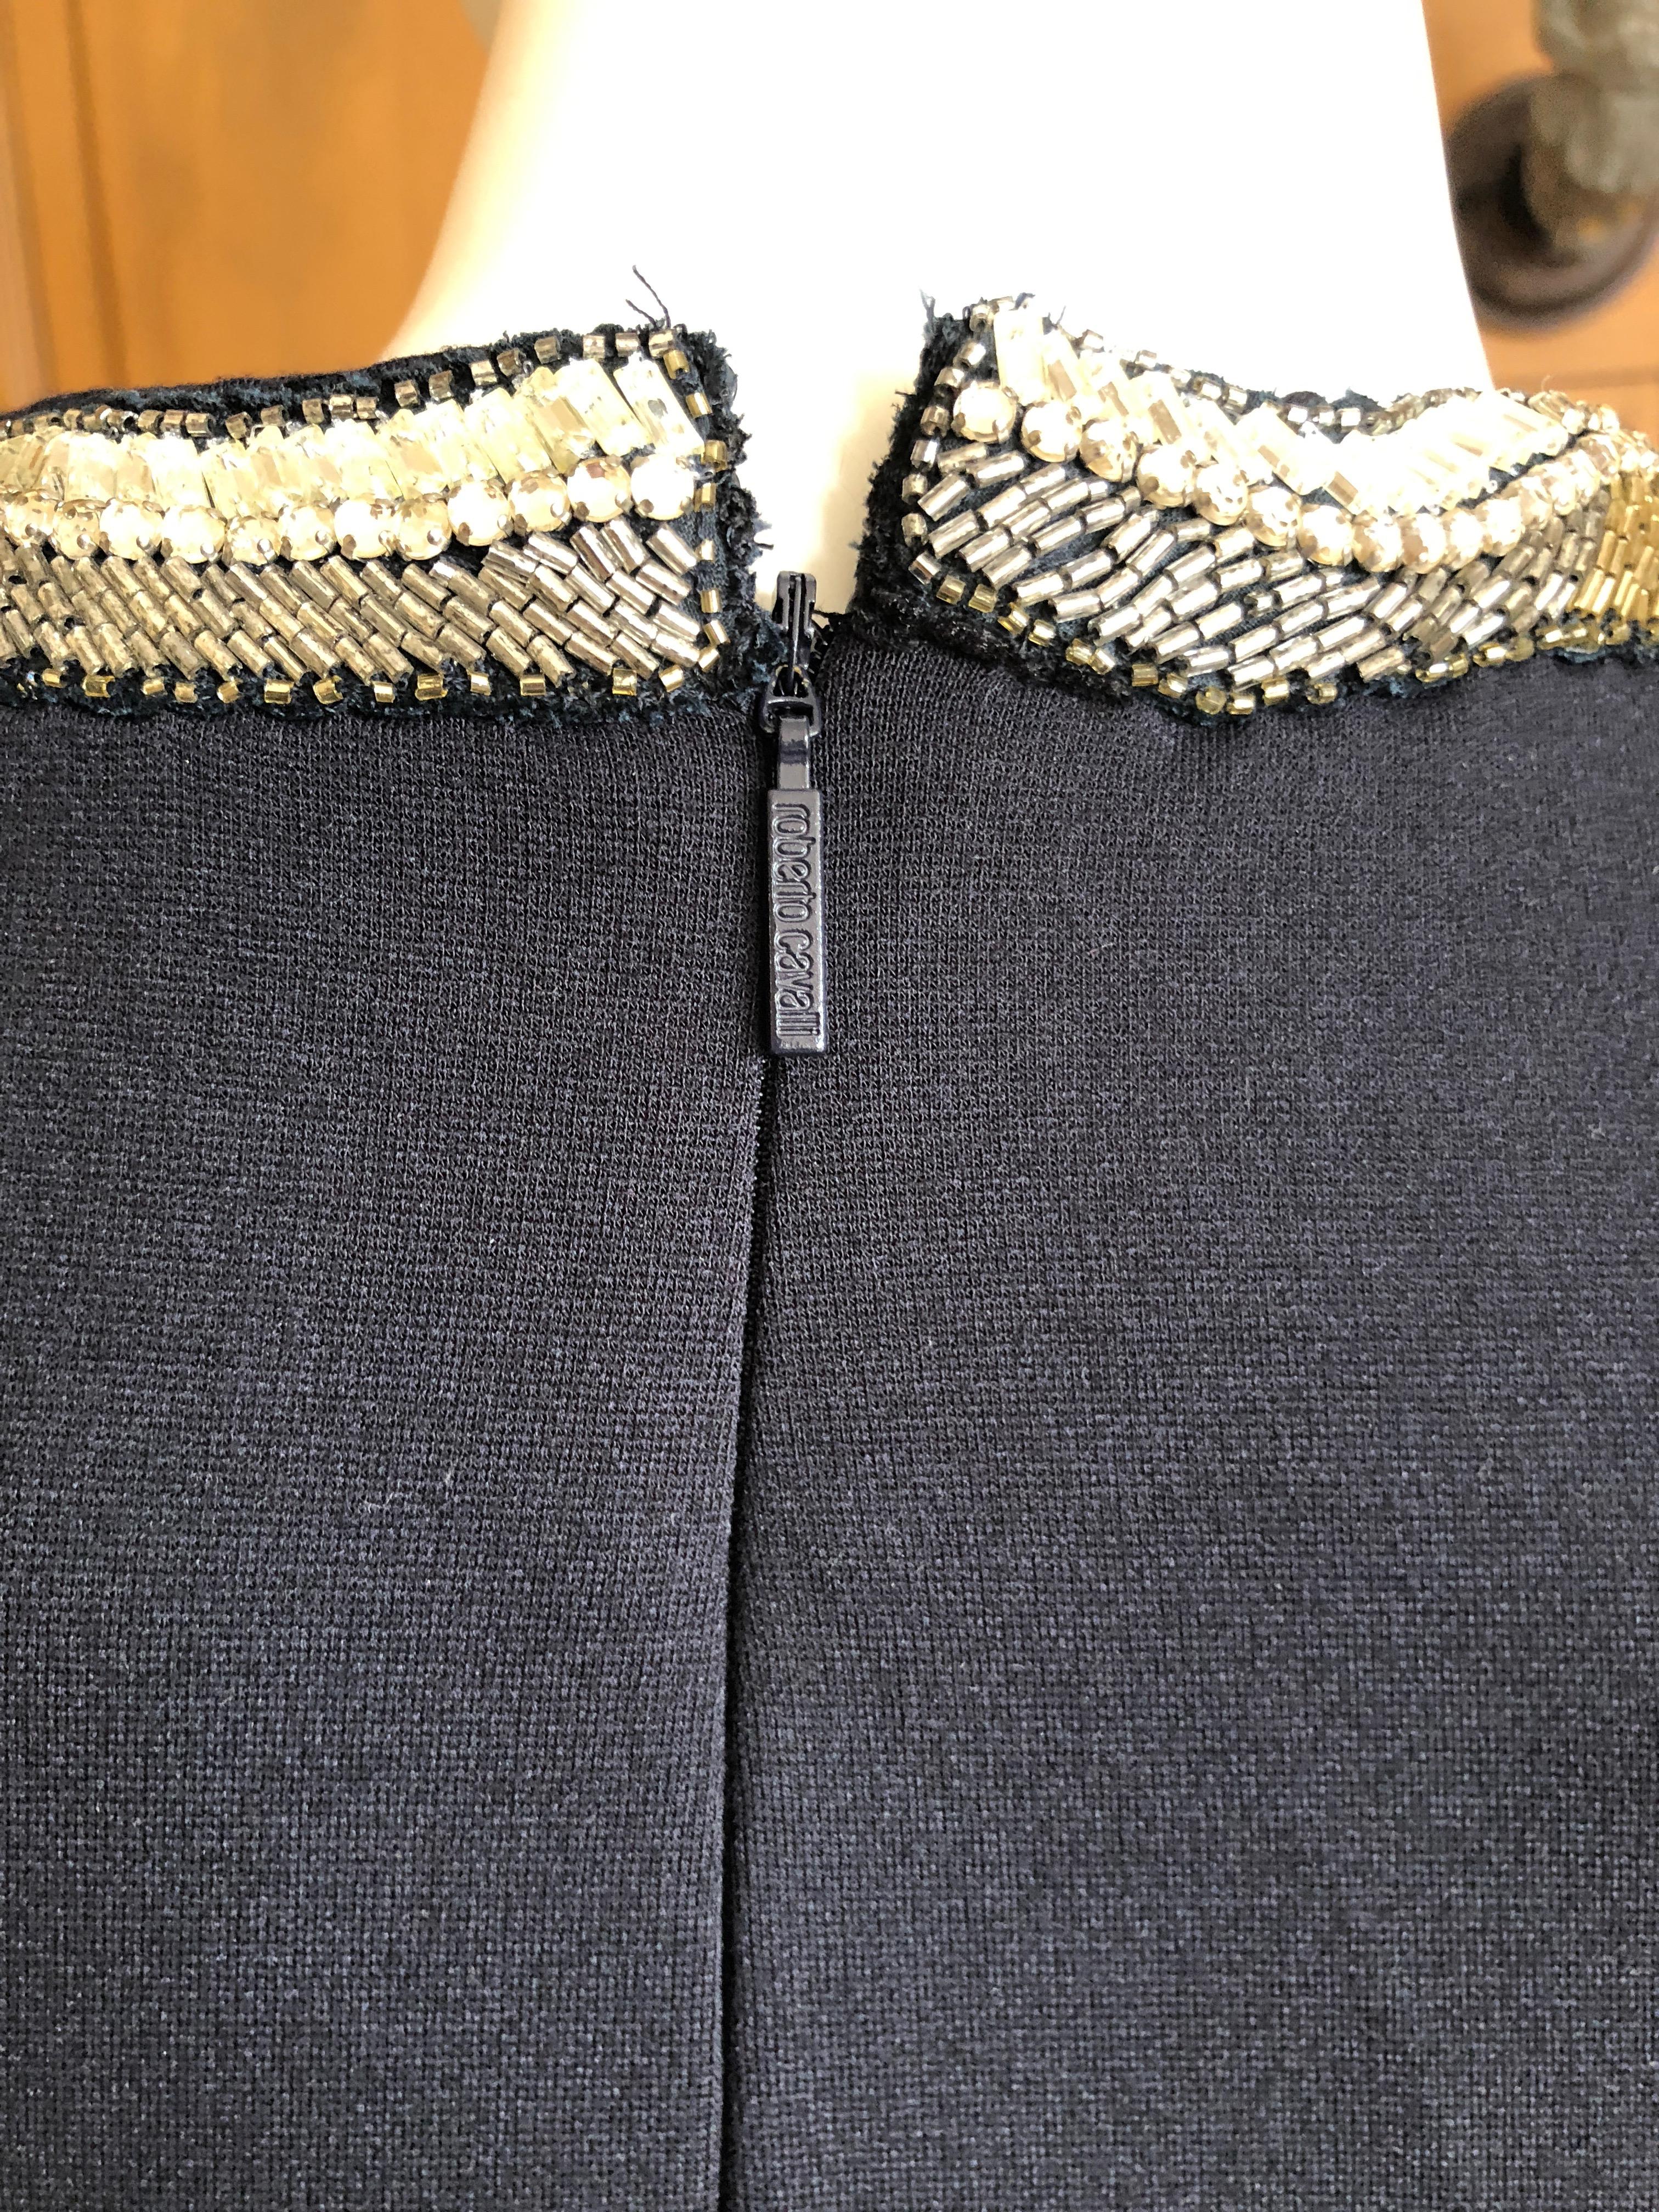 Roberto Cavalli Vintage Black Bodycon Dress w Crystal Embellished Snake Collar For Sale 2